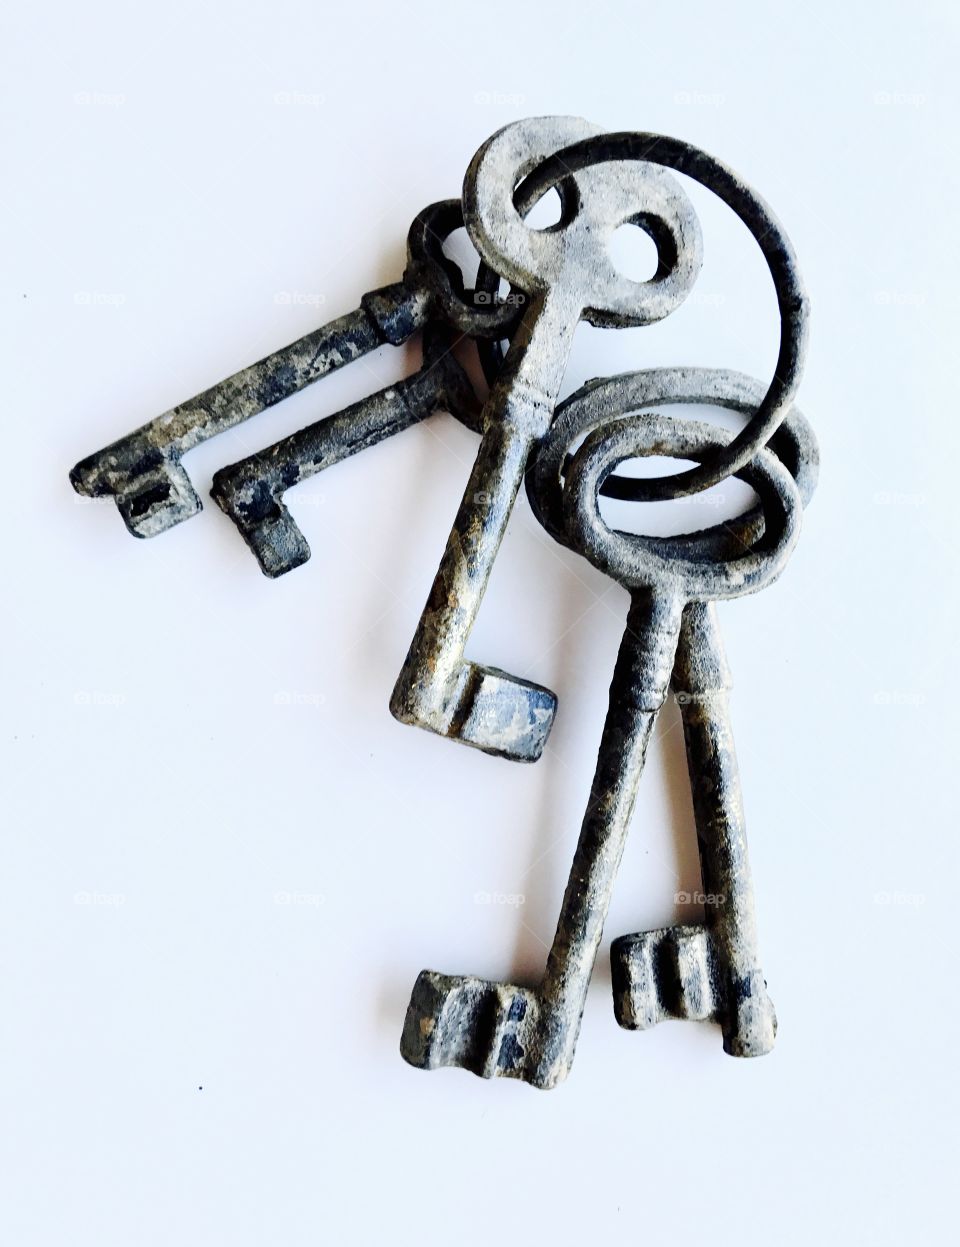 Studio shot of old keys